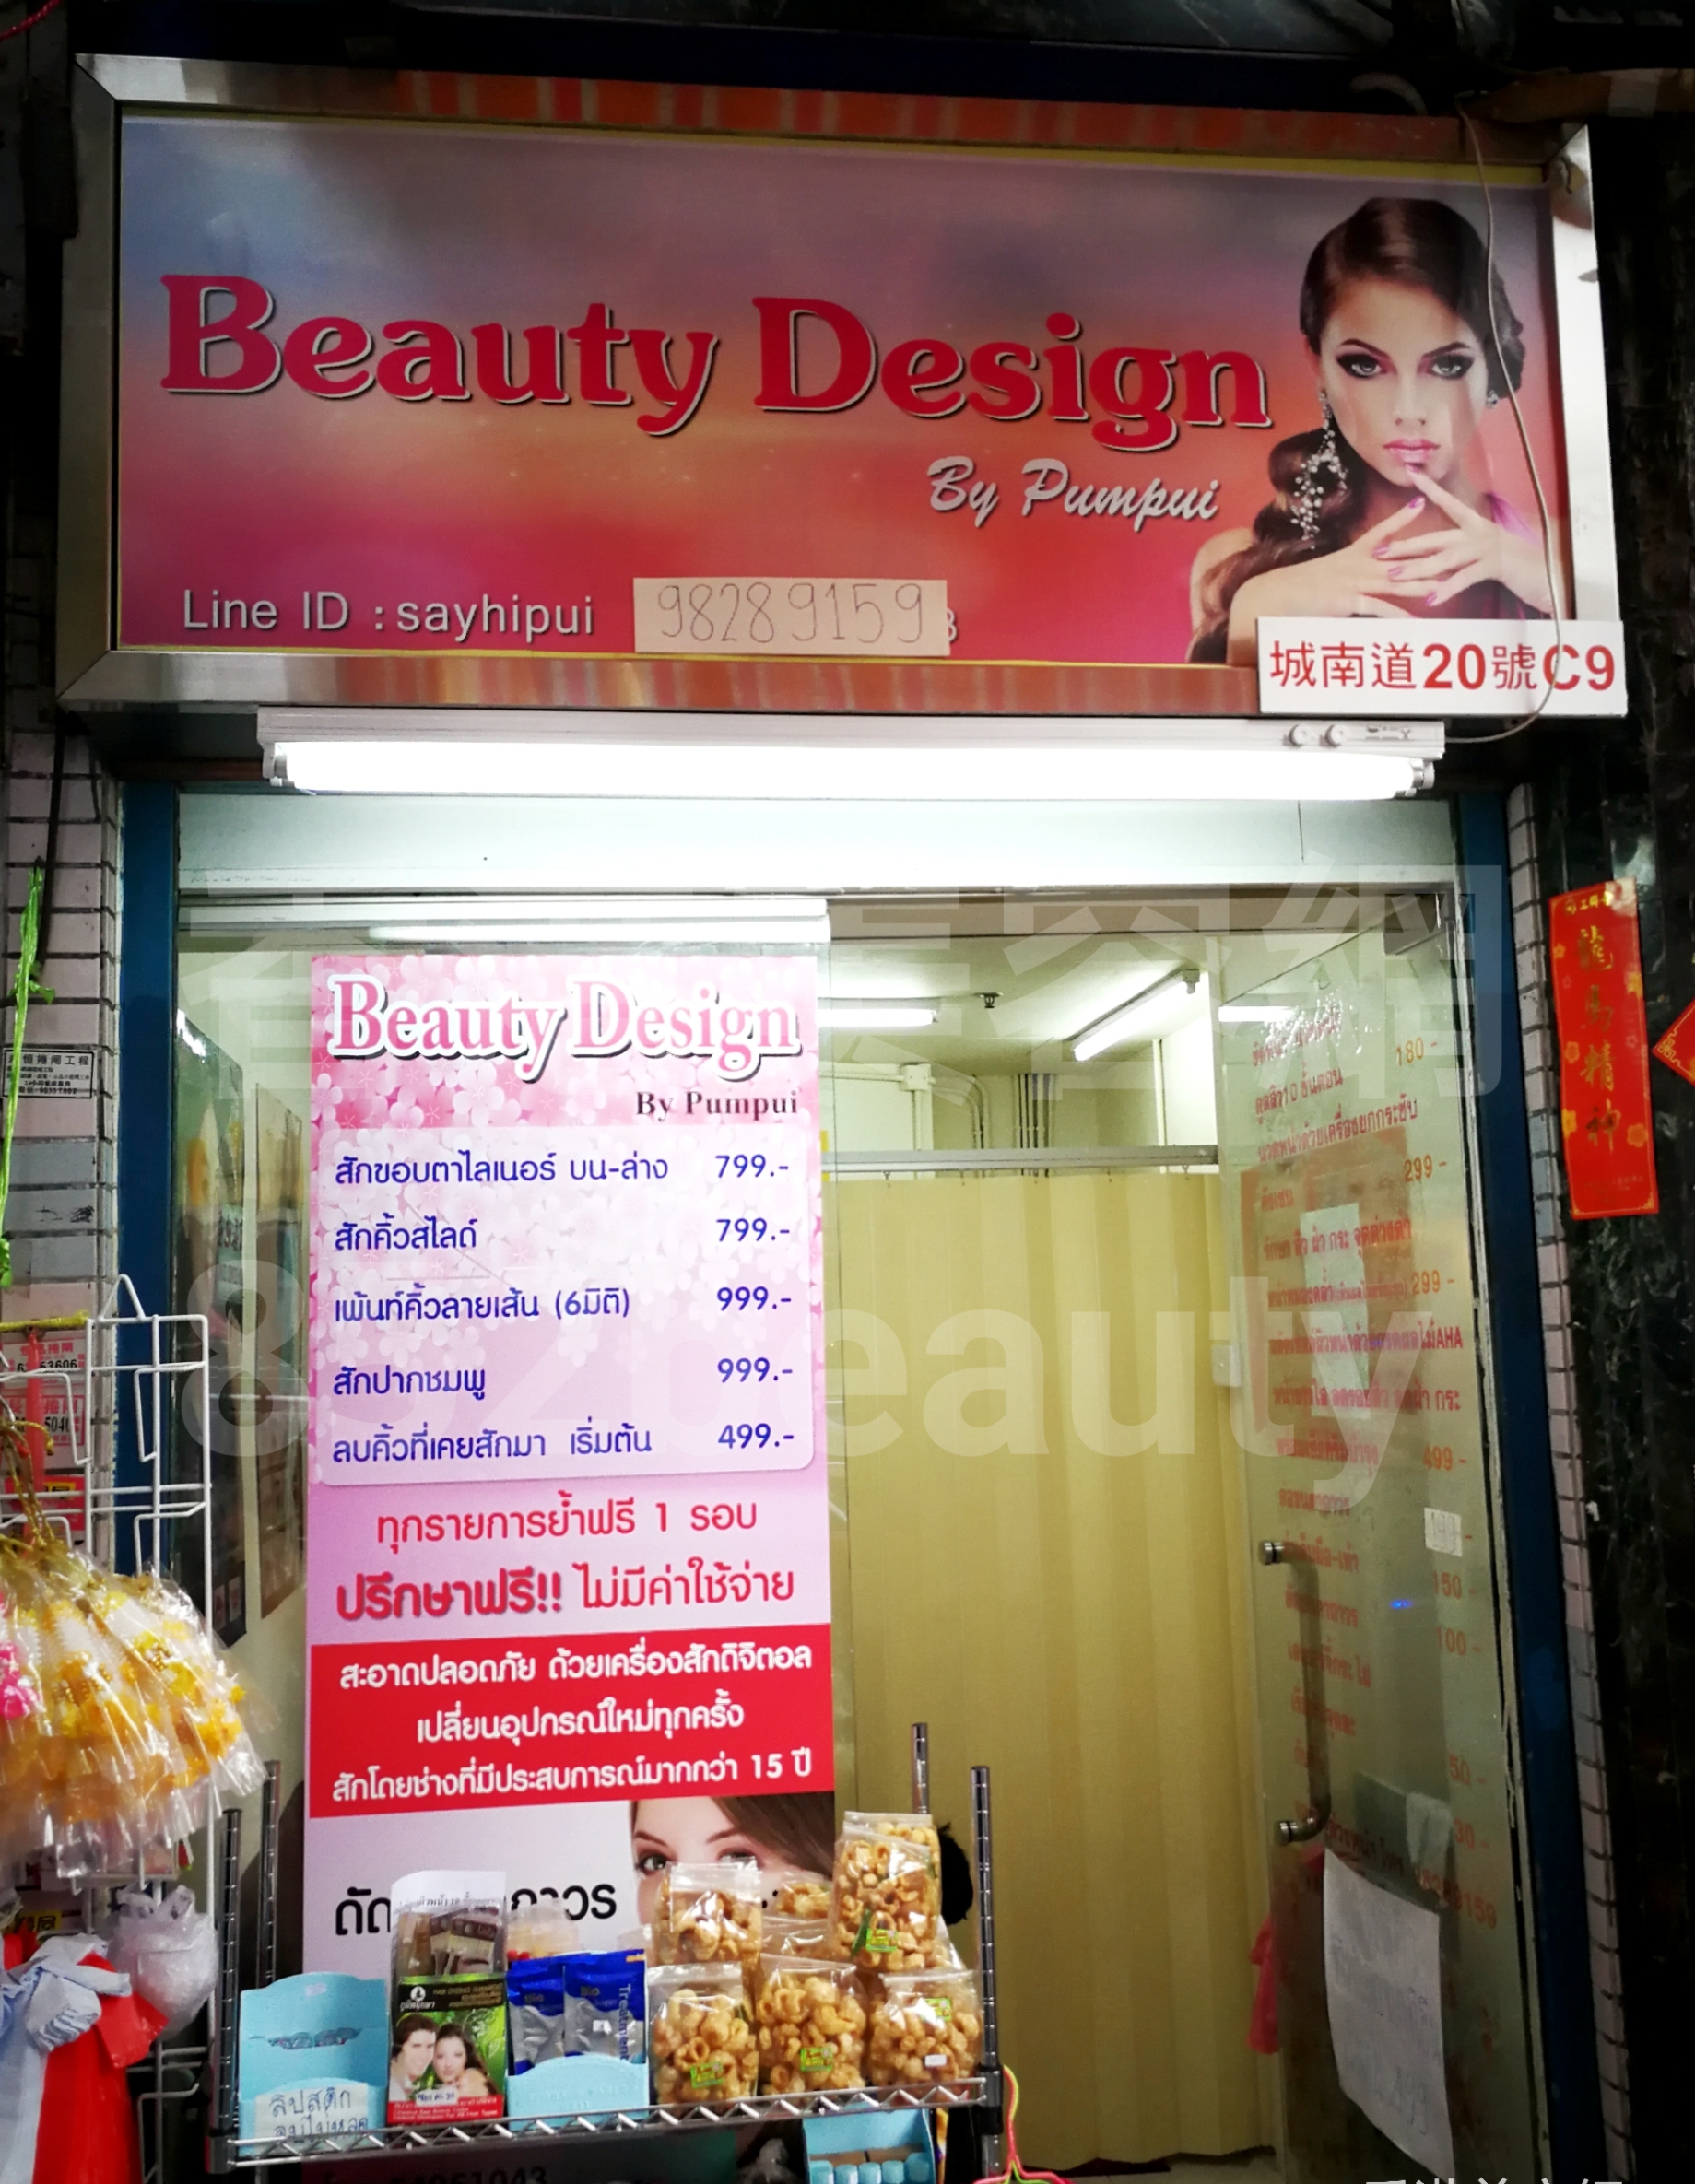 香港美容網 Hong Kong Beauty Salon 美容院 / 美容師: Beauty Design